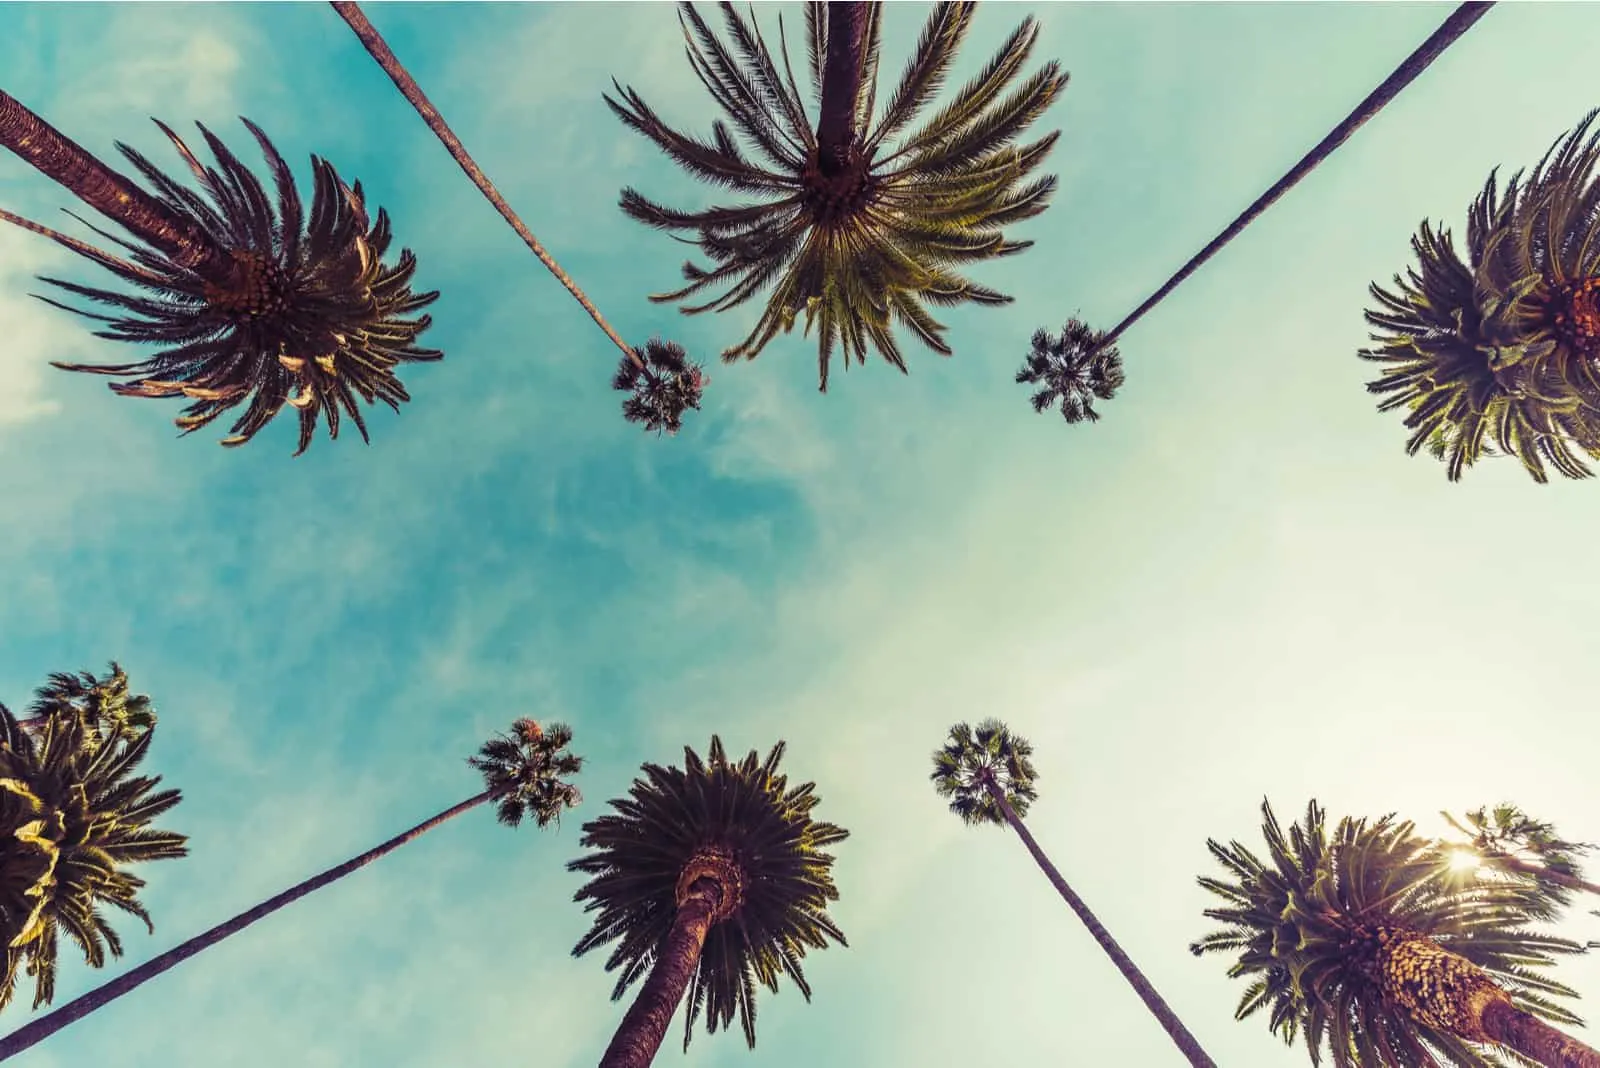 Los Angeles palm trees